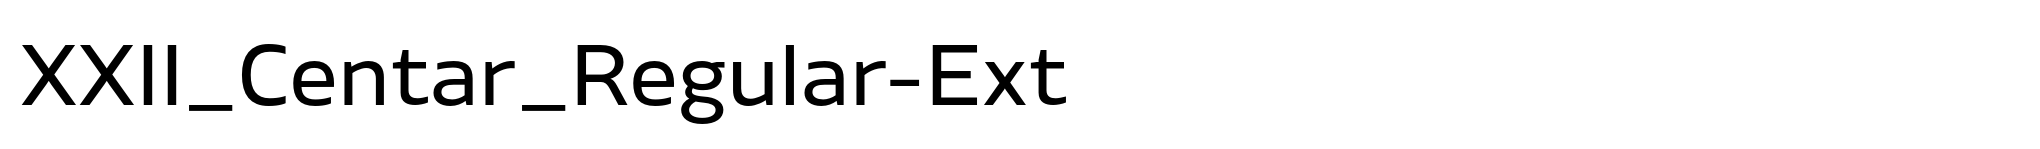 XXII_Centar_Regular-Ext image